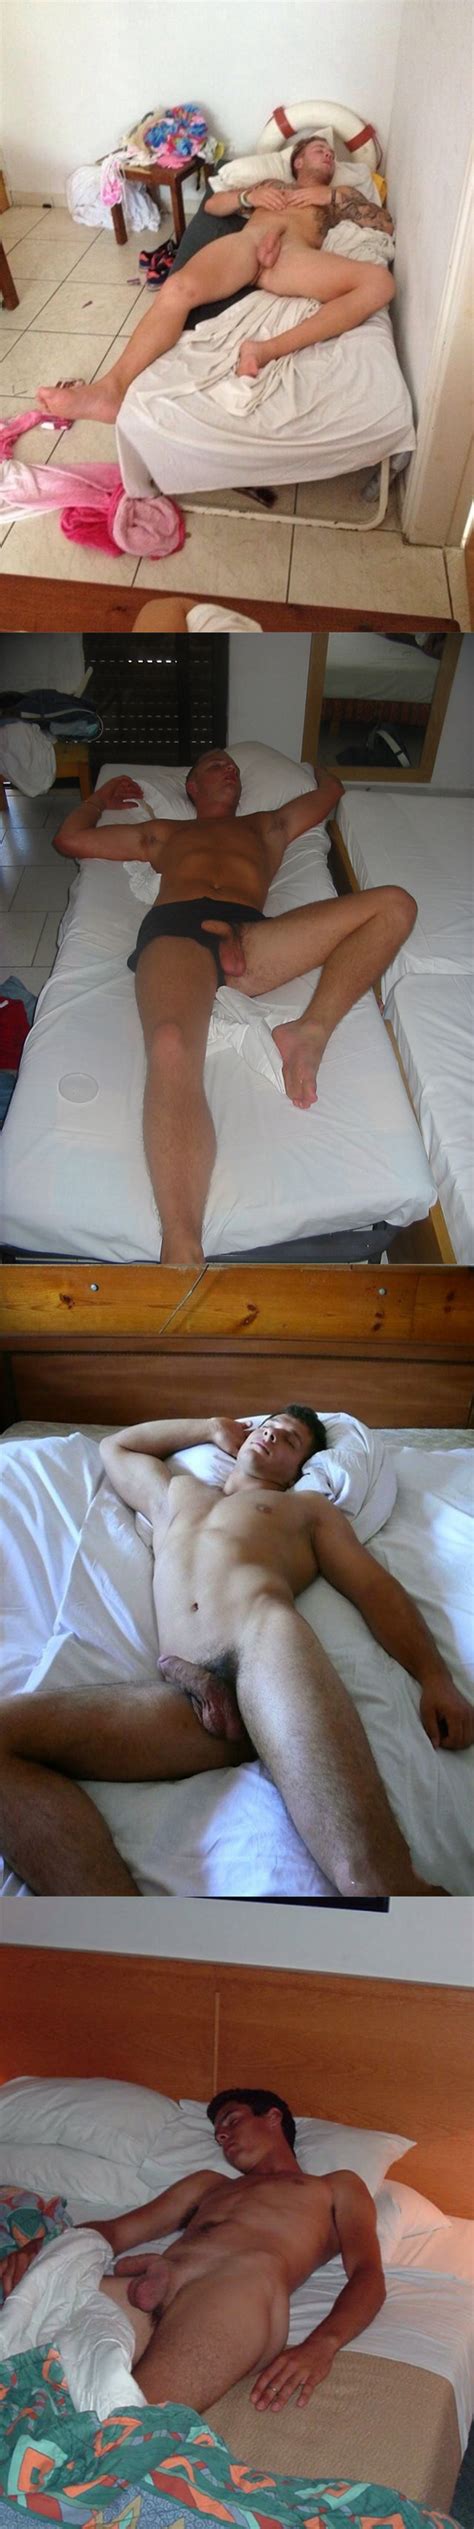 Guys Caught Sleeping Naked By Hidden Cams Spycamfromguys Hidden Cams